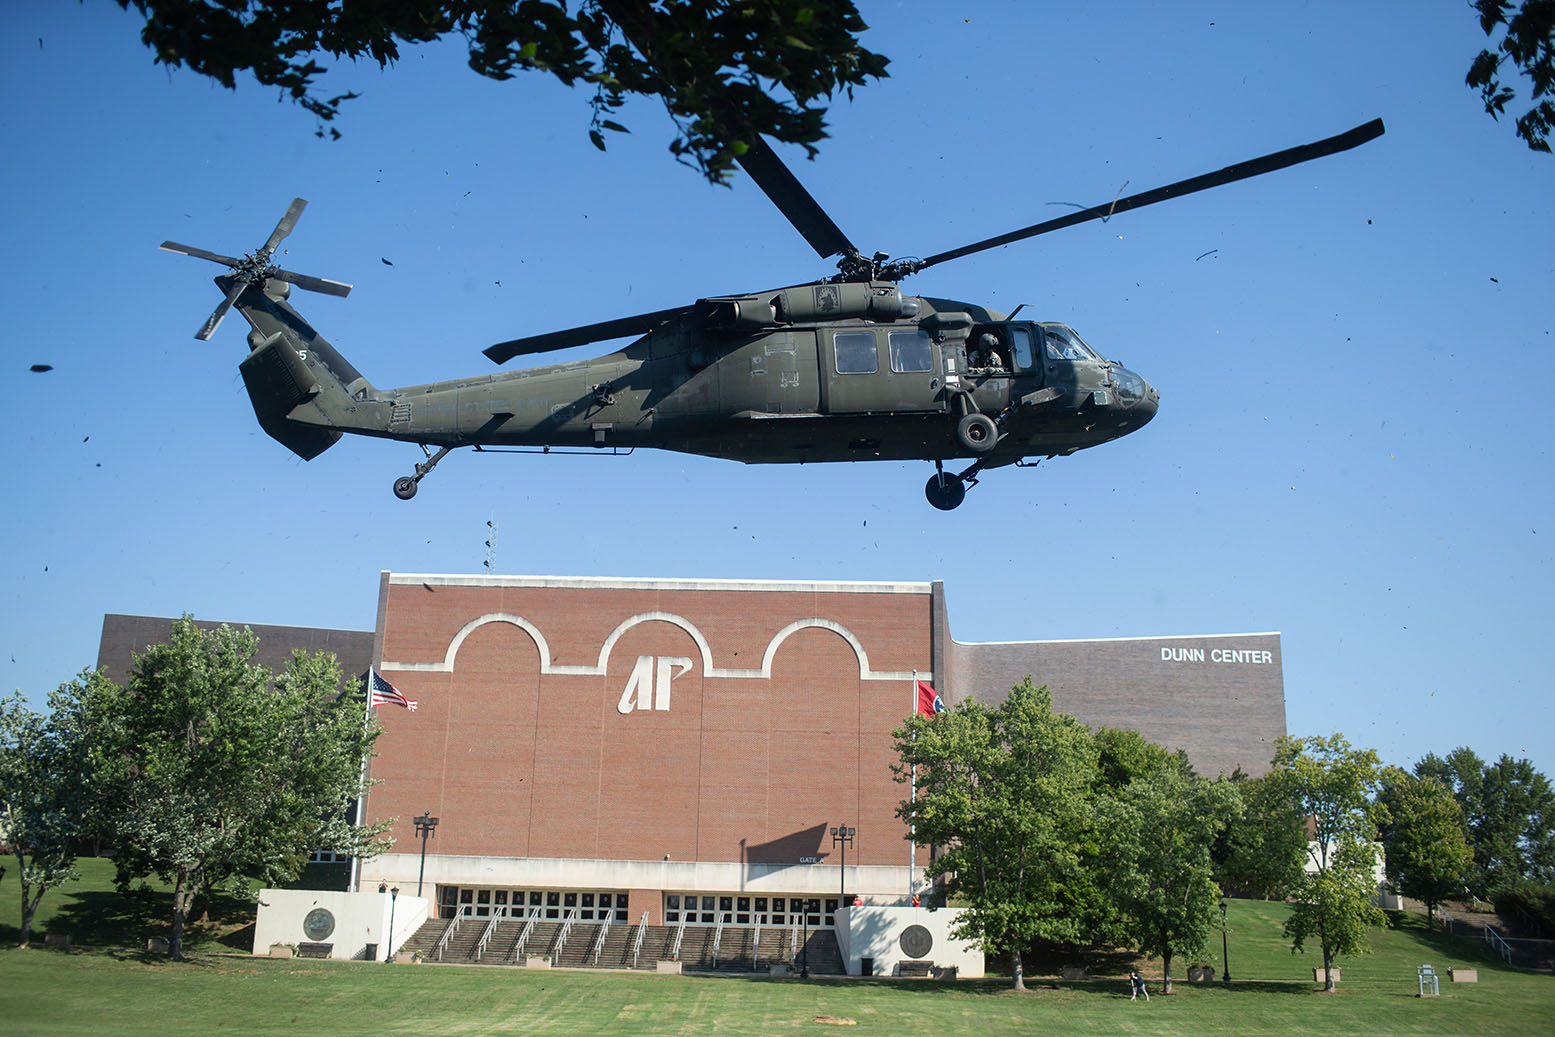 Blackhawks land on campus